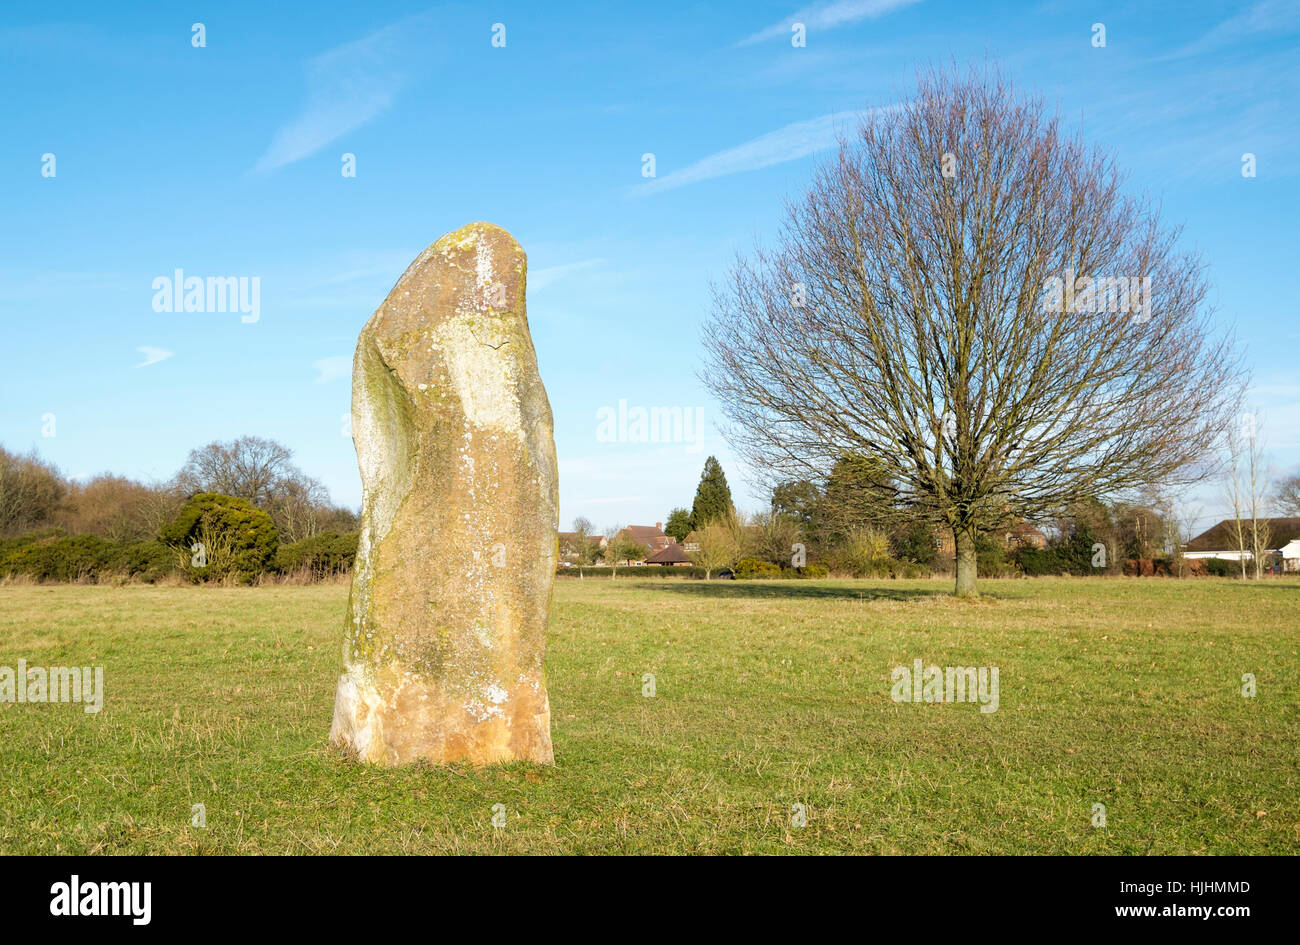 The Millenium stone, Ibstone Common, Ibstone, Buckinghamshire, England, UK Stock Photo